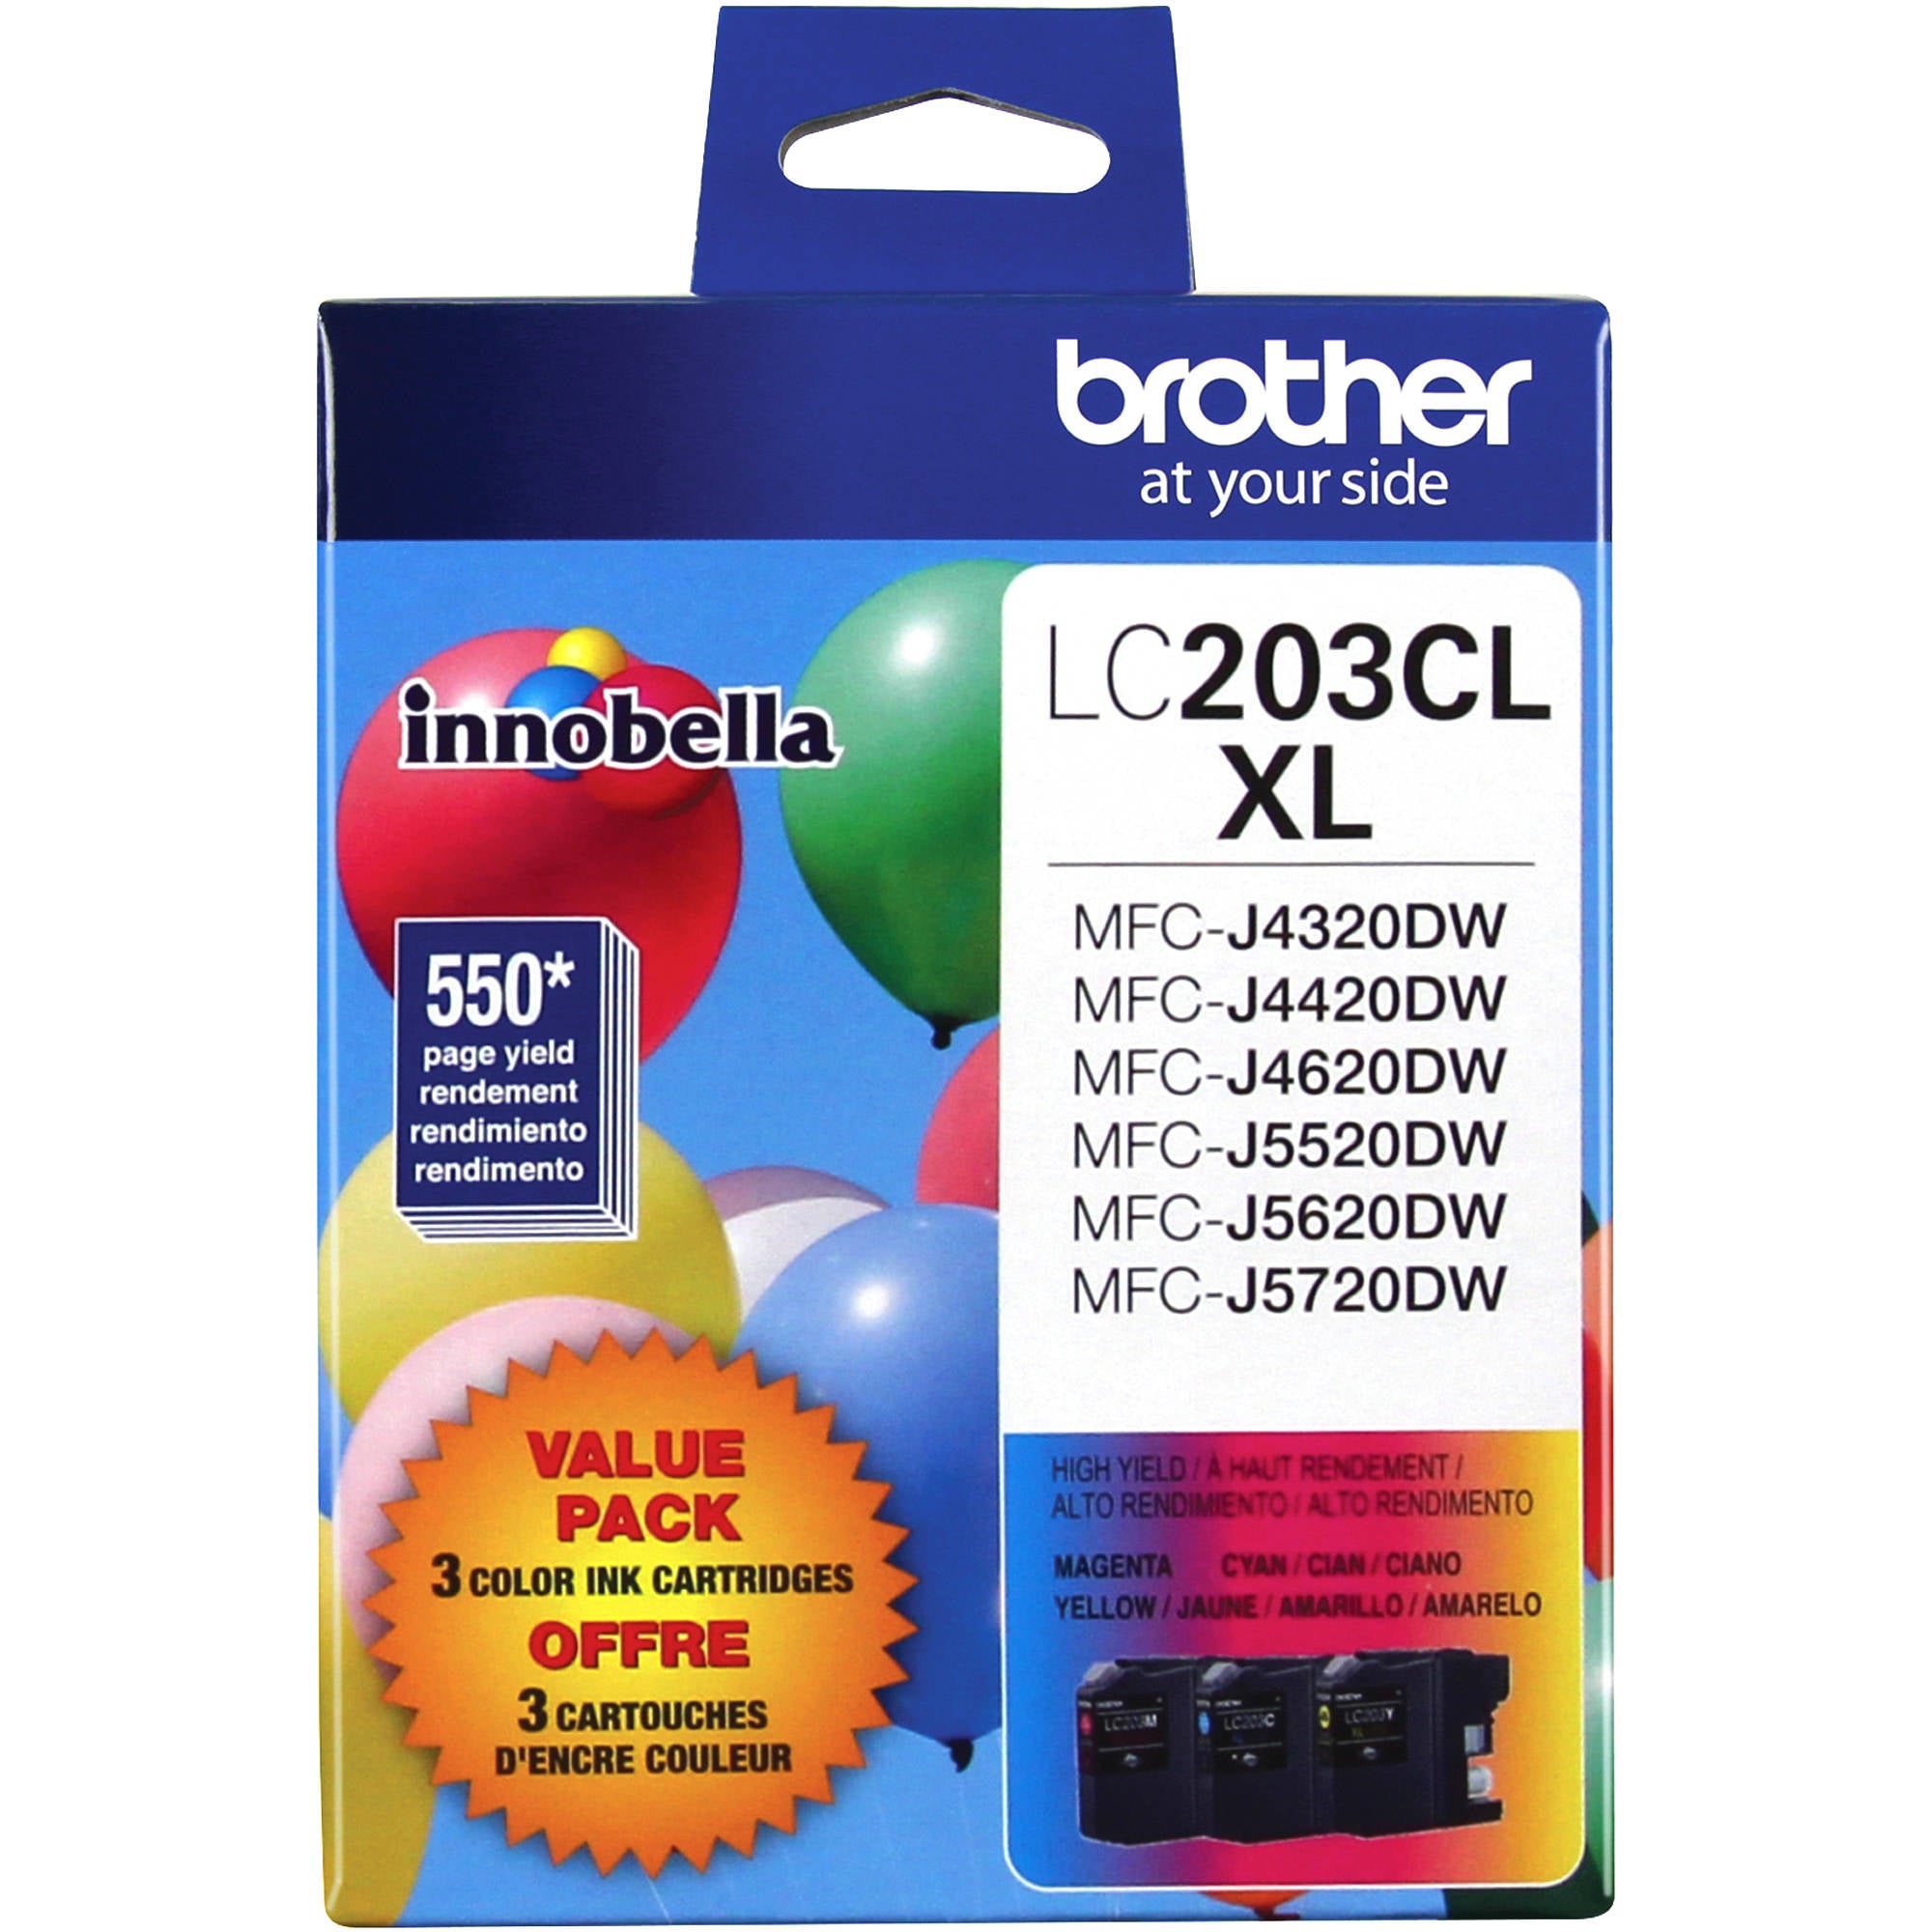 Absolute Toner Brother Genuine OEM LC2033PKS High Yield Color (Cyan Magenta Yellow) Ink Cartridge, 3 Pack Original Brother Cartridges